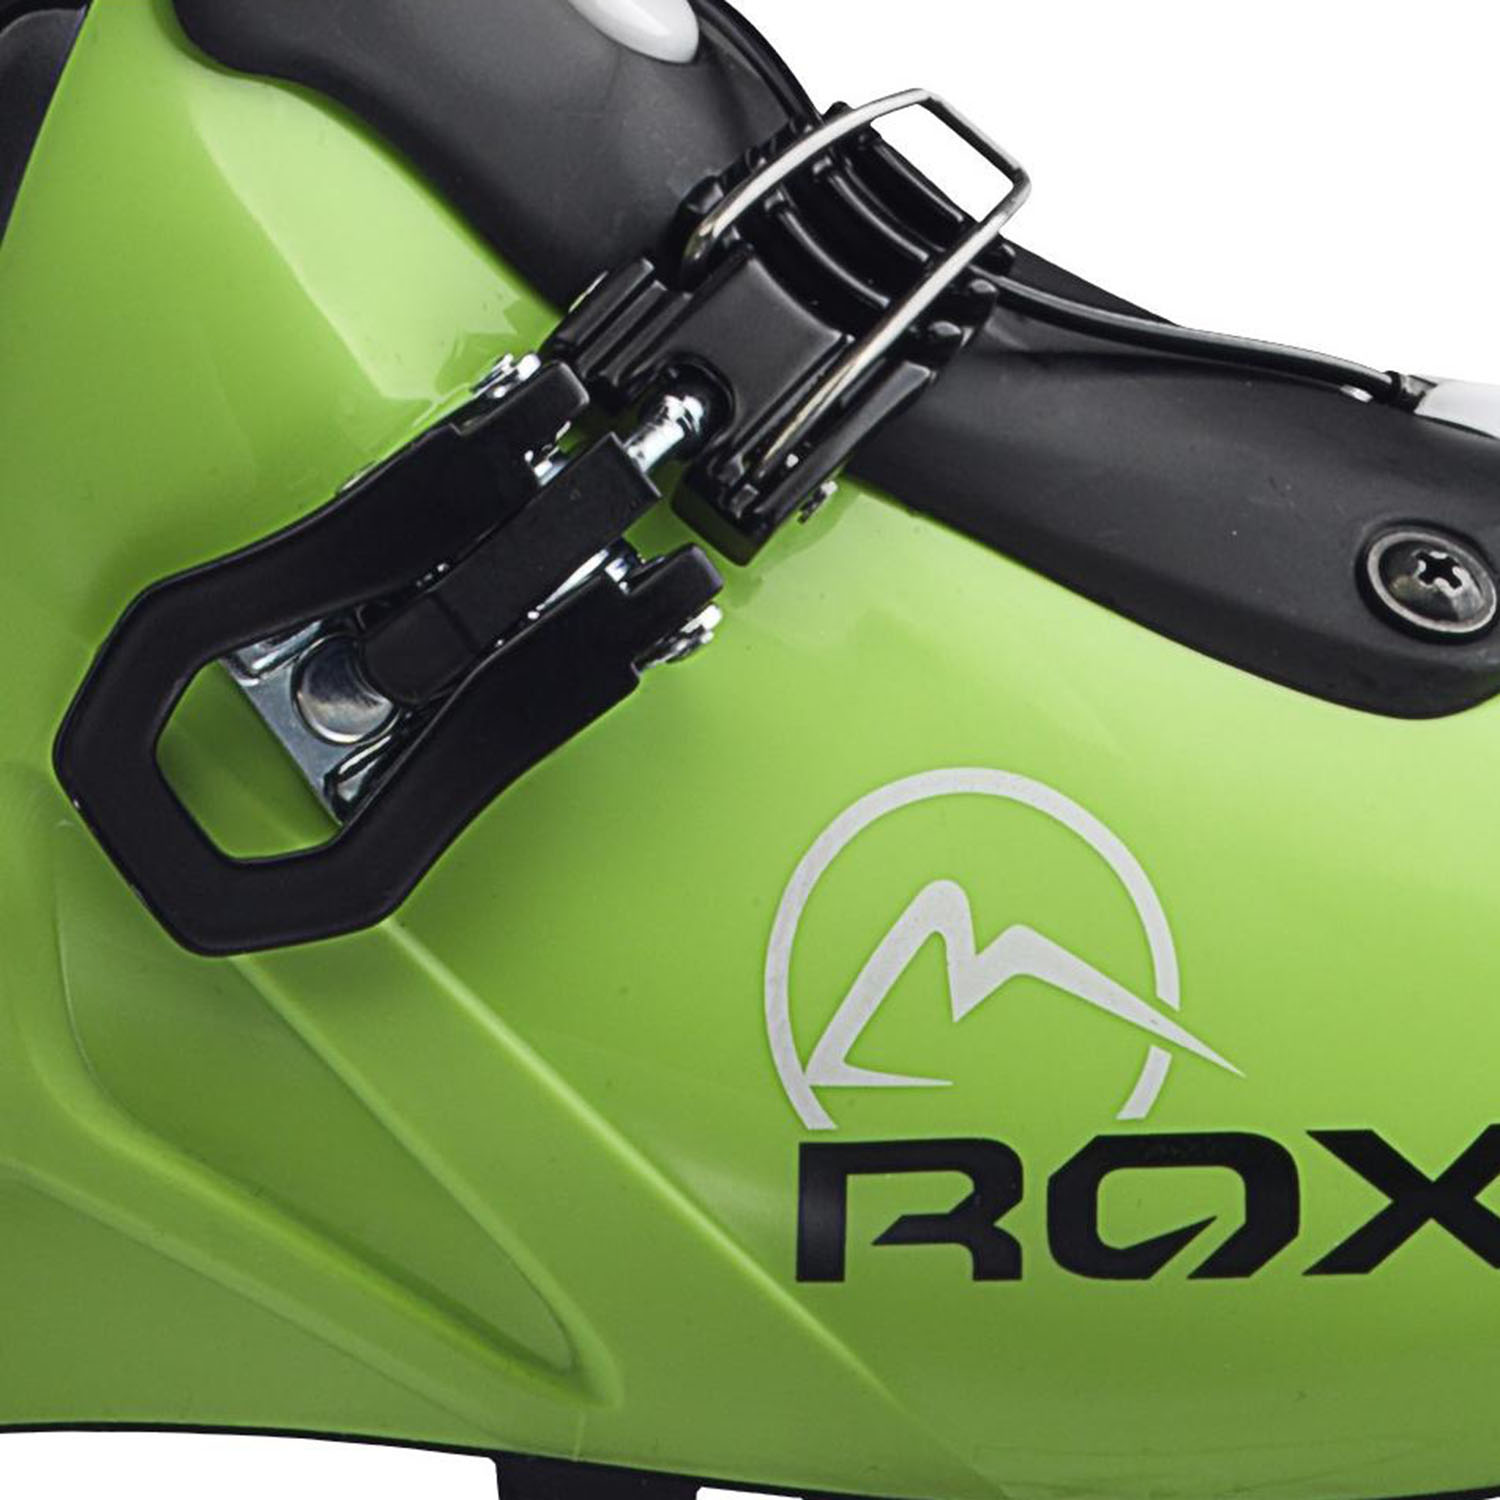 Горнолыжные ботинки ROXA RX 1.0 Limon/black/black-white